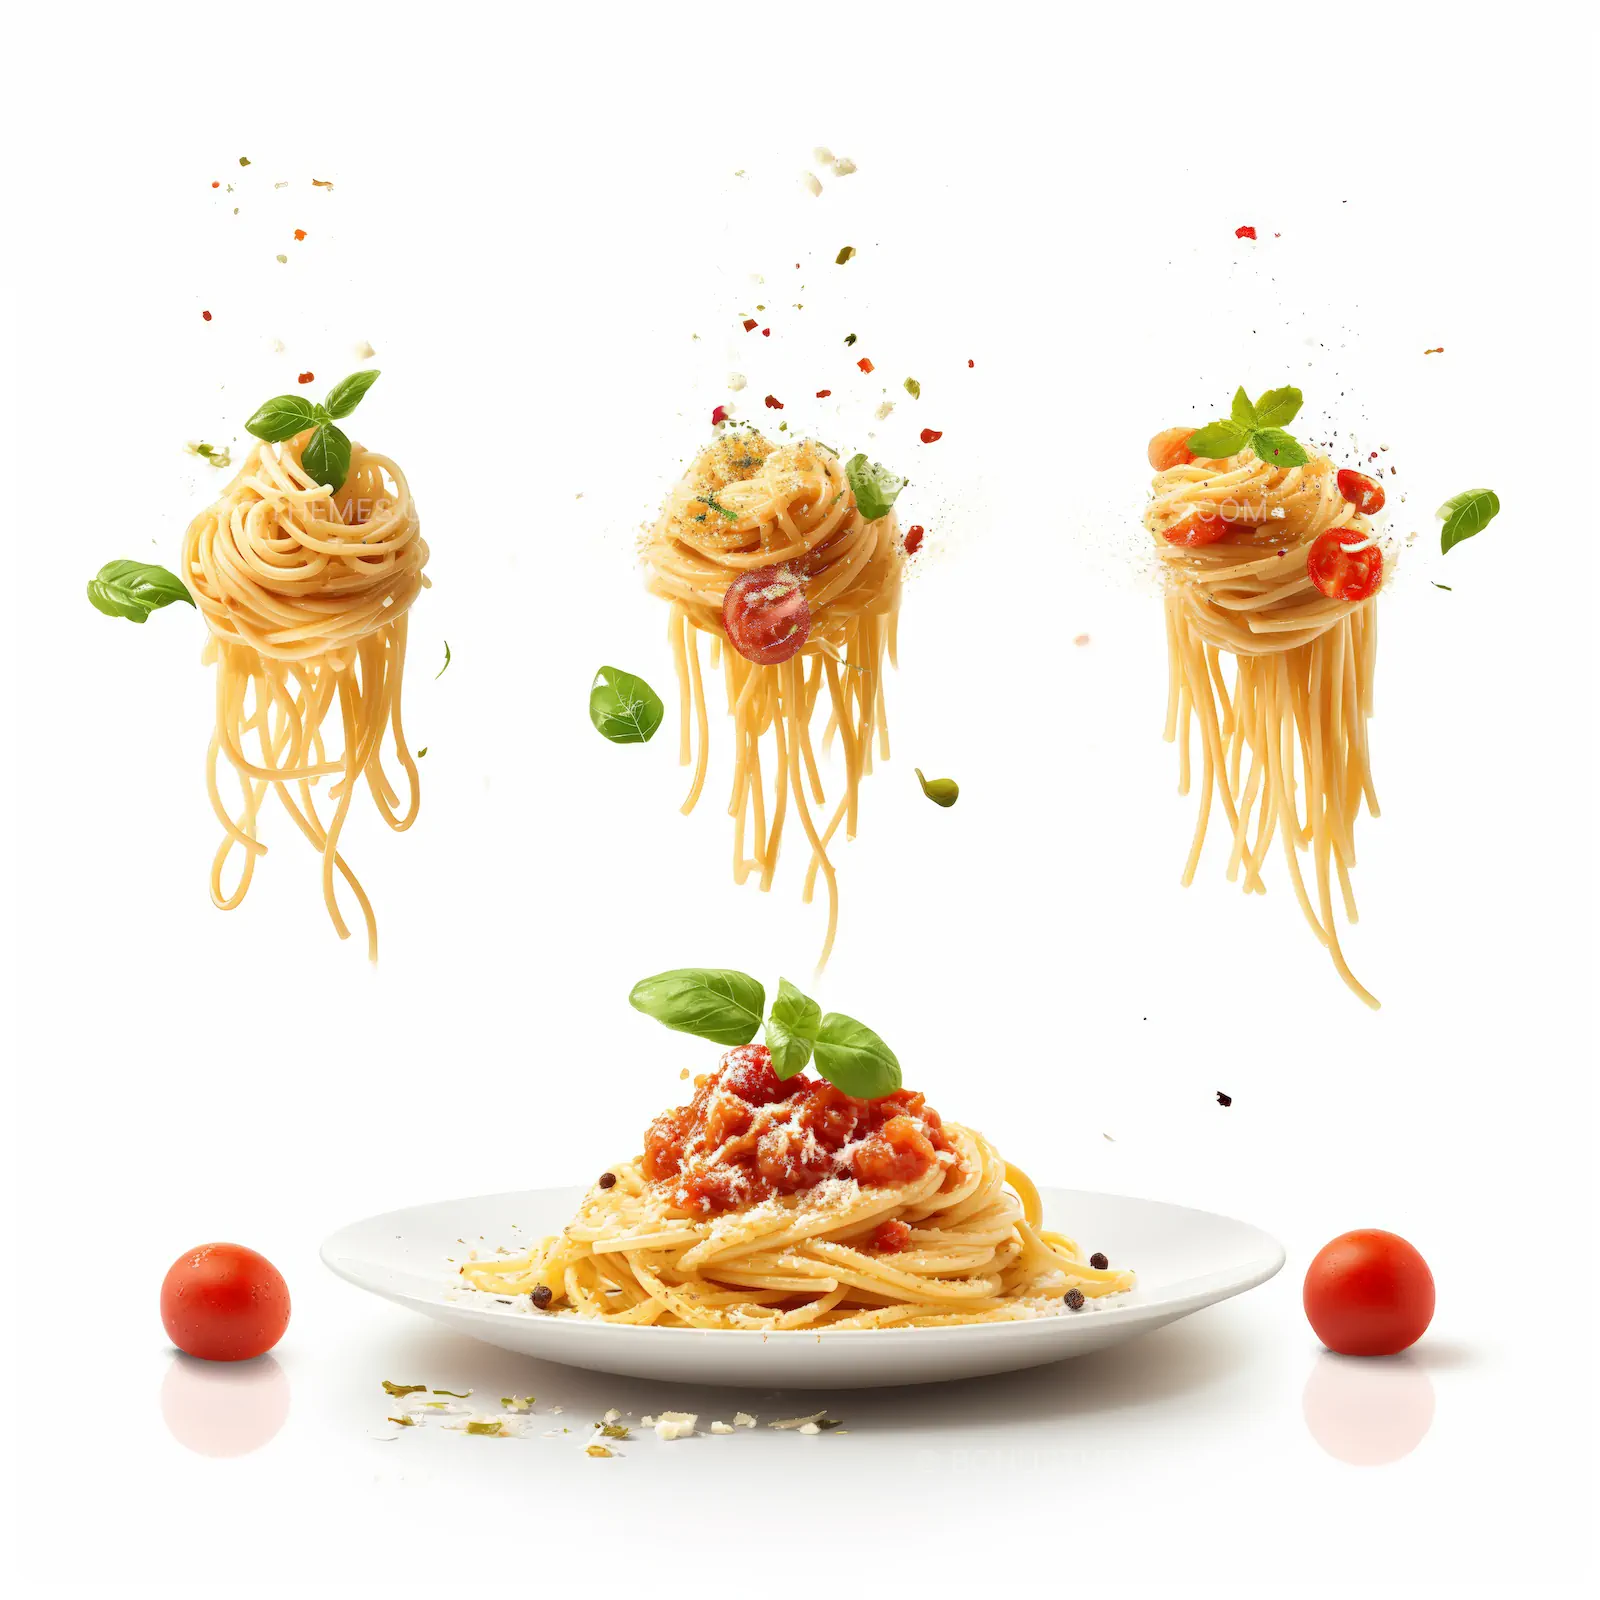 Savory spaghetti, tomatoes, basil, elegance